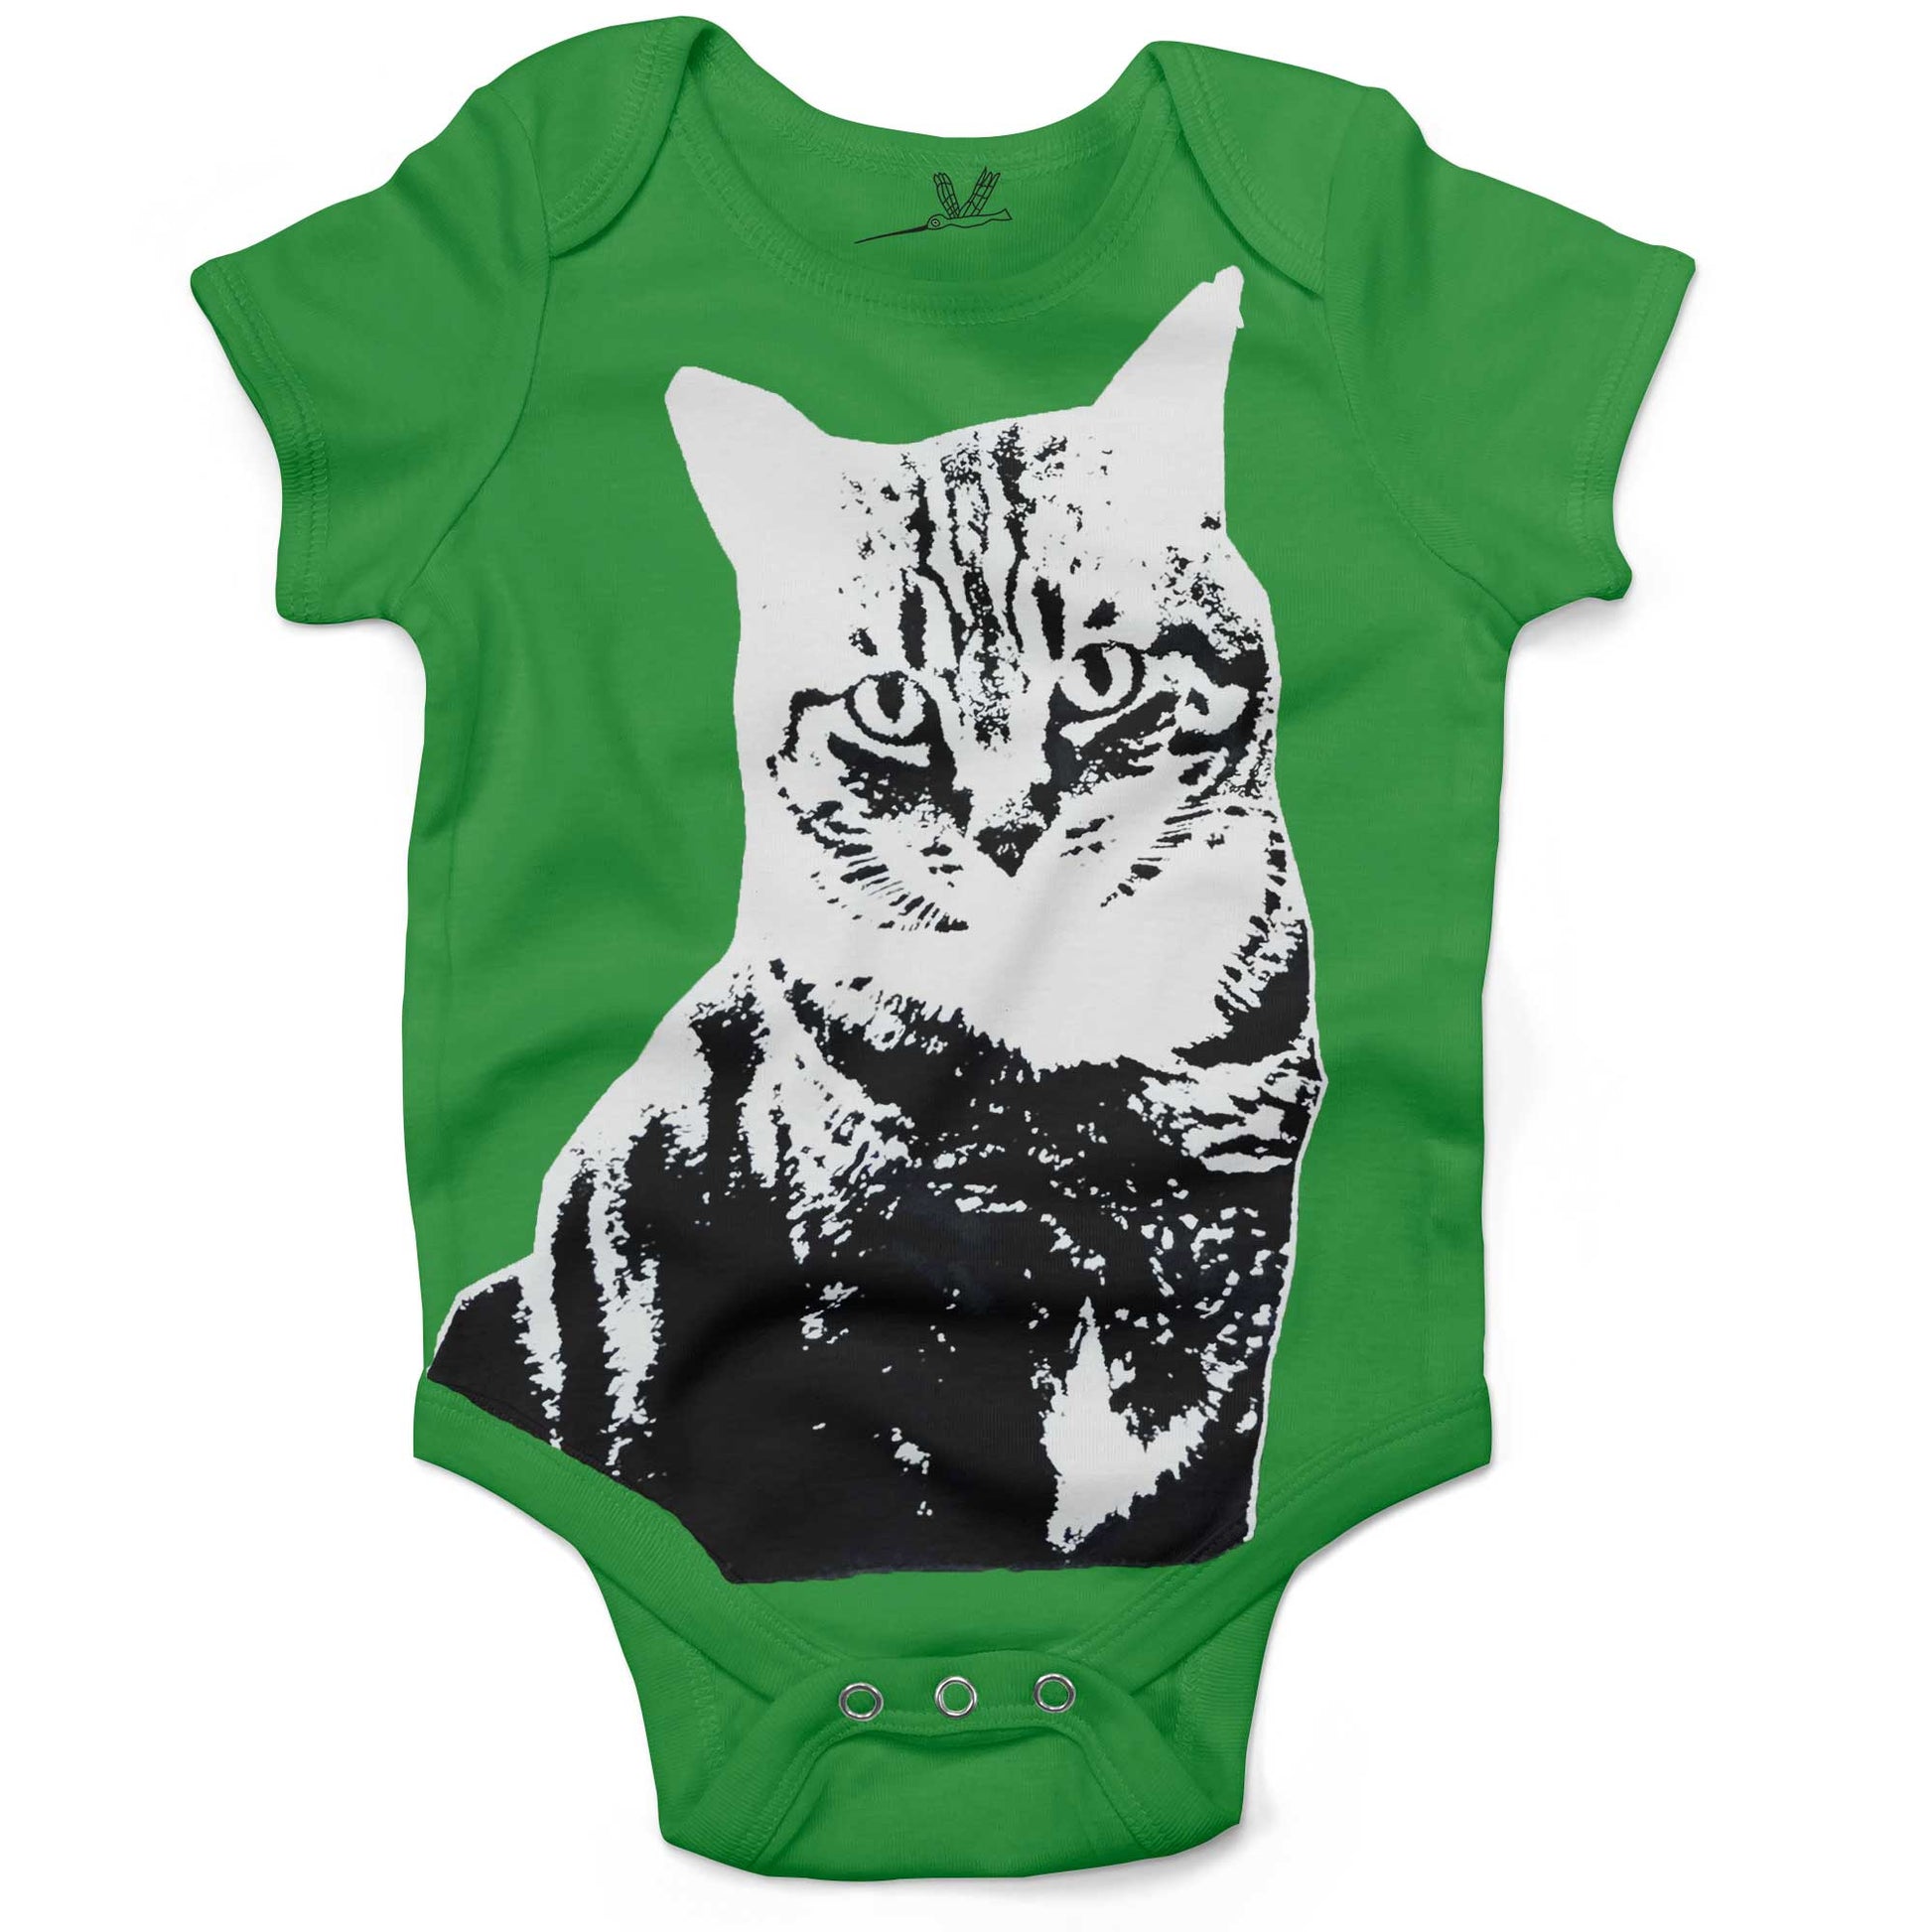 Black & White Cat Infant Bodysuit or Raglan Baby Tee-Grass Green-3-6 months